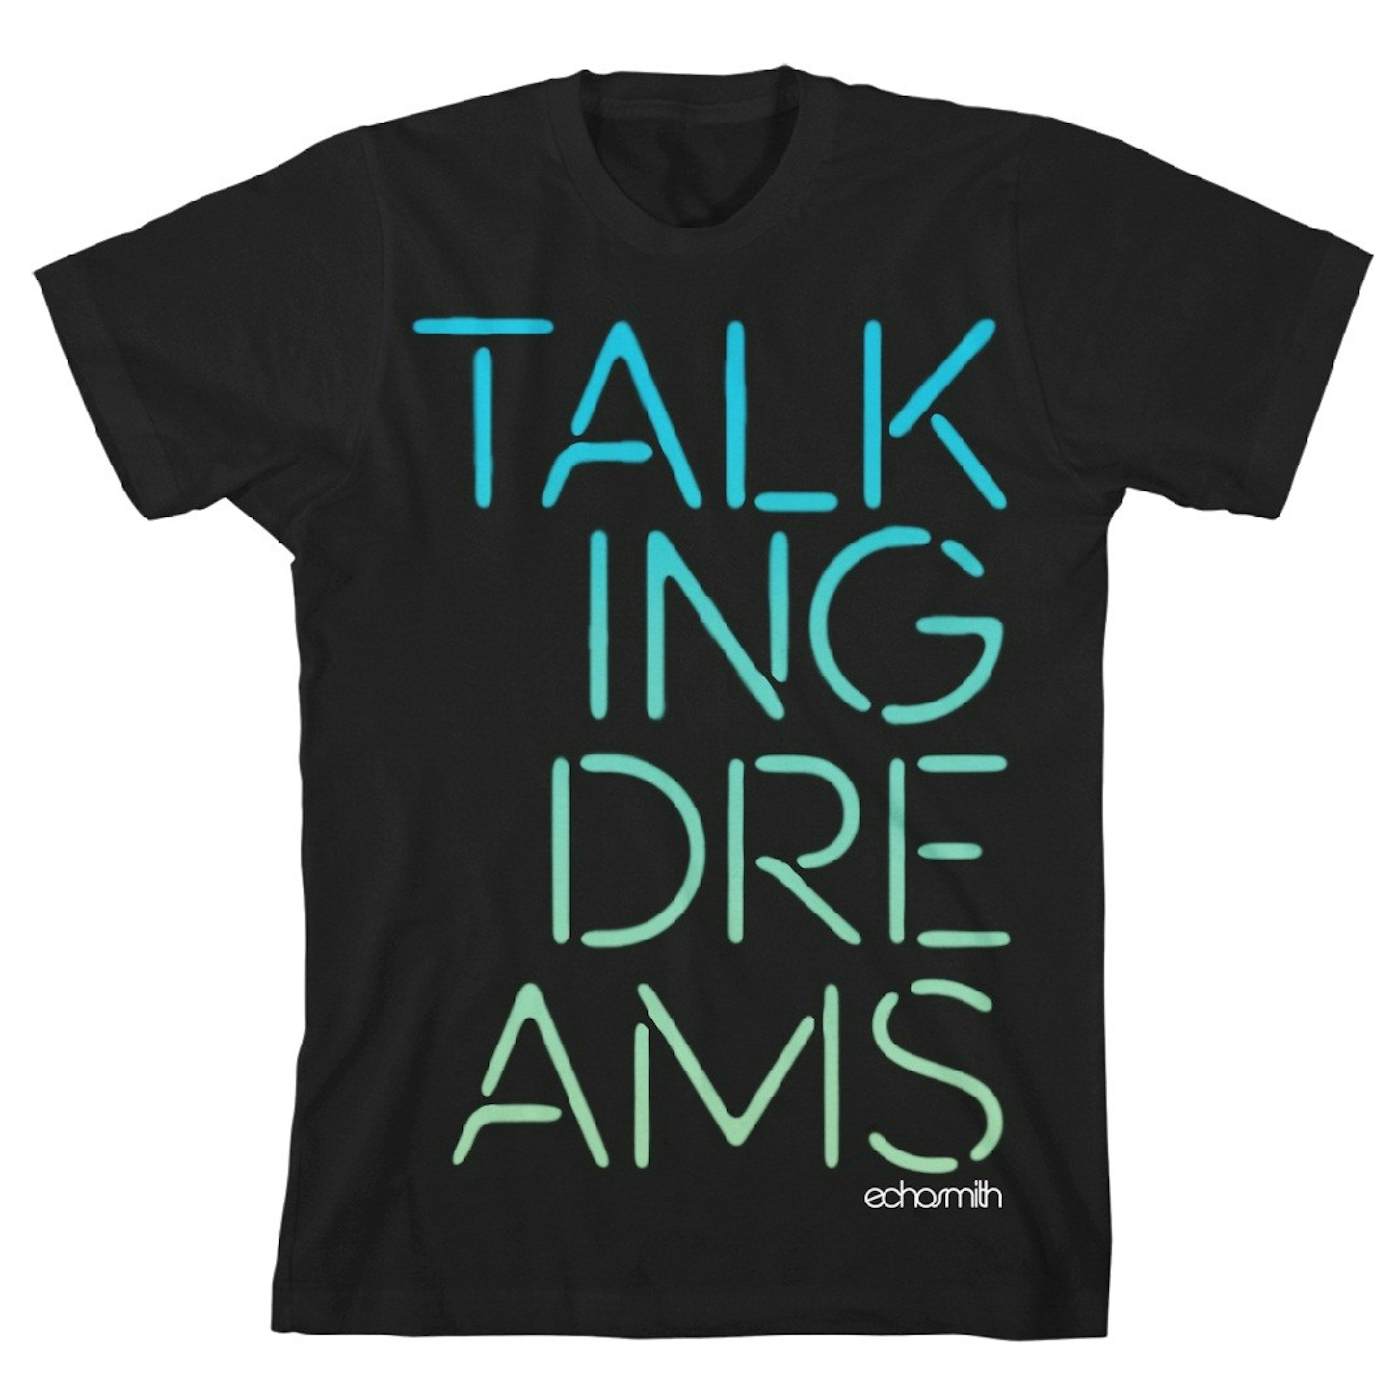 Echosmith Talking Dreams Gradient T-Shirt